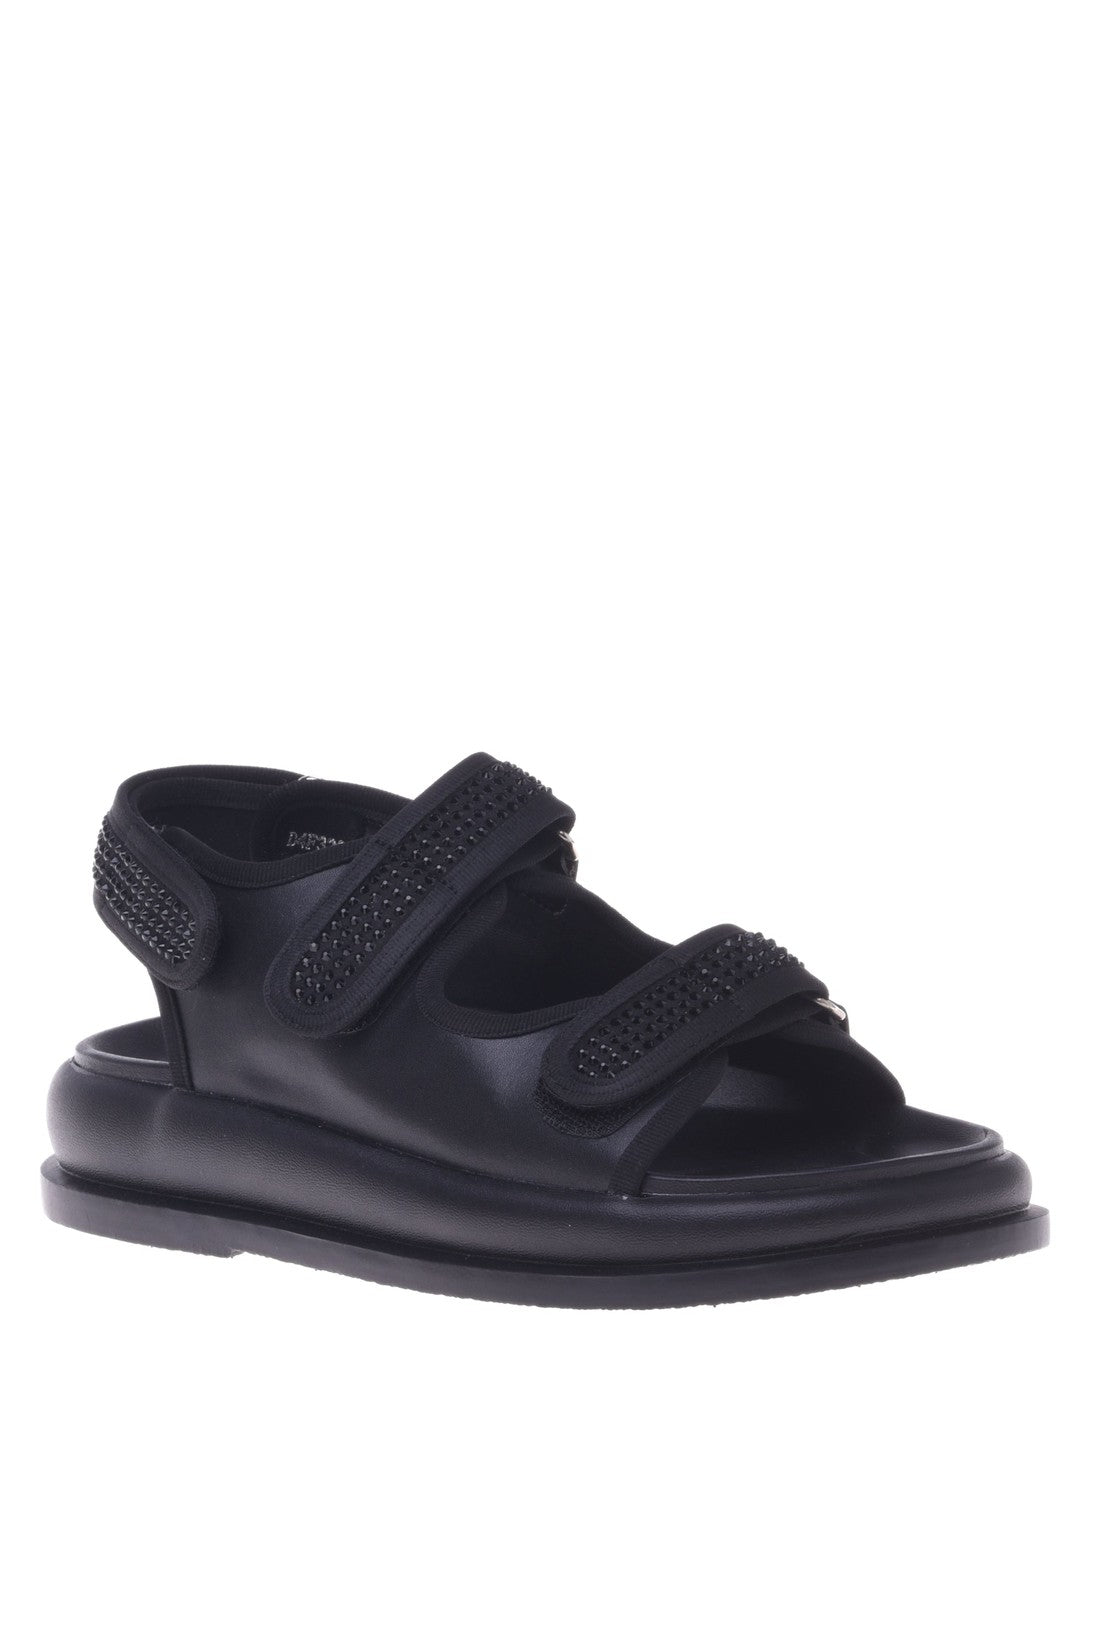 Sandal in black calfskin with rhinestones